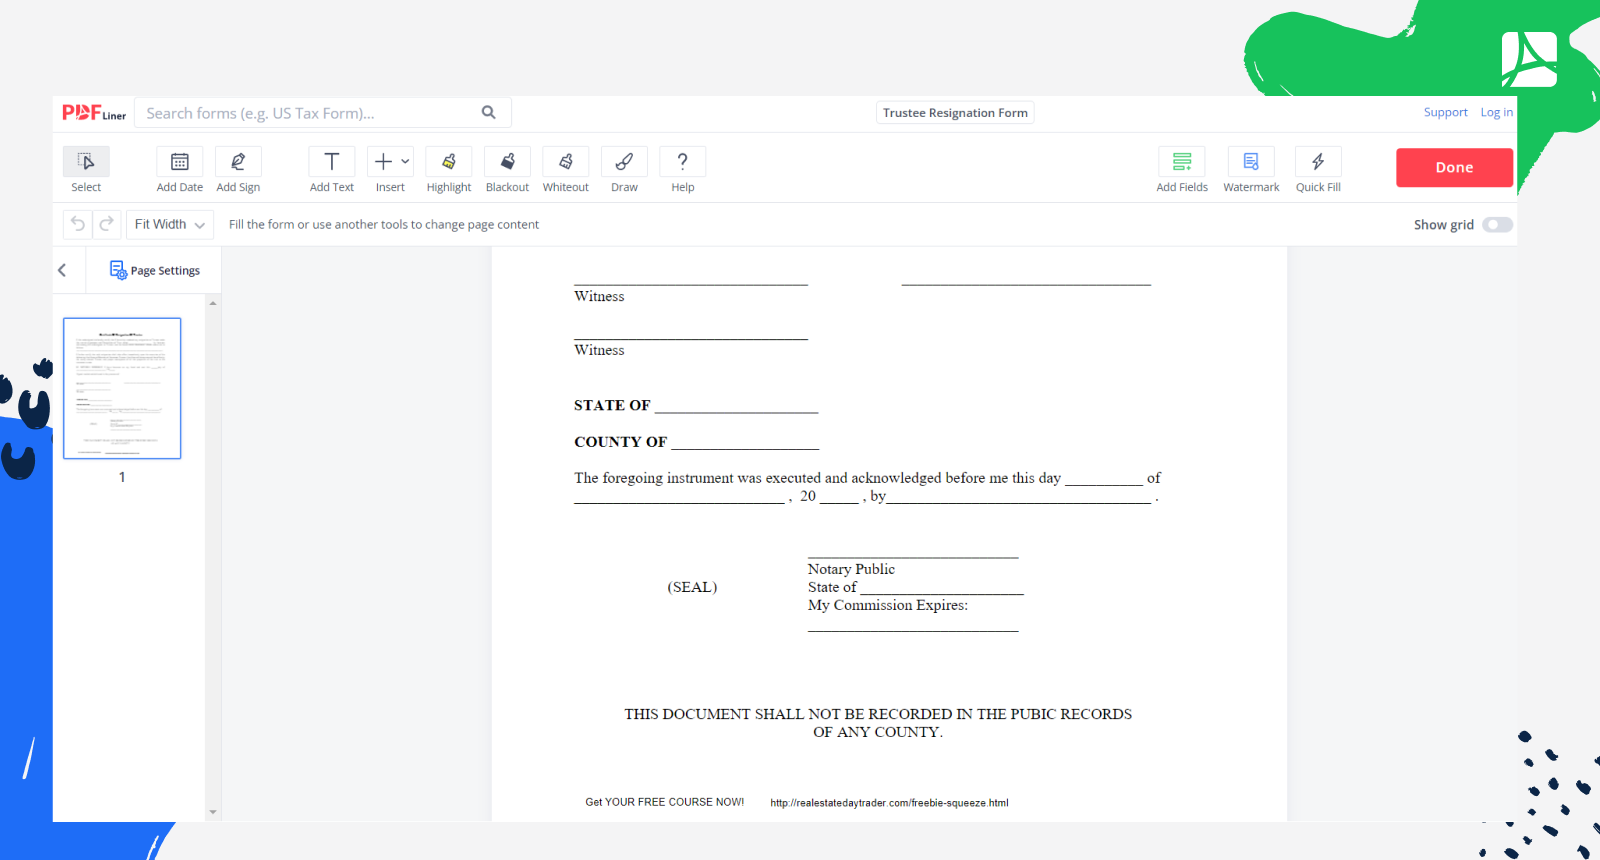 Resignation Trustee Form Screenshot